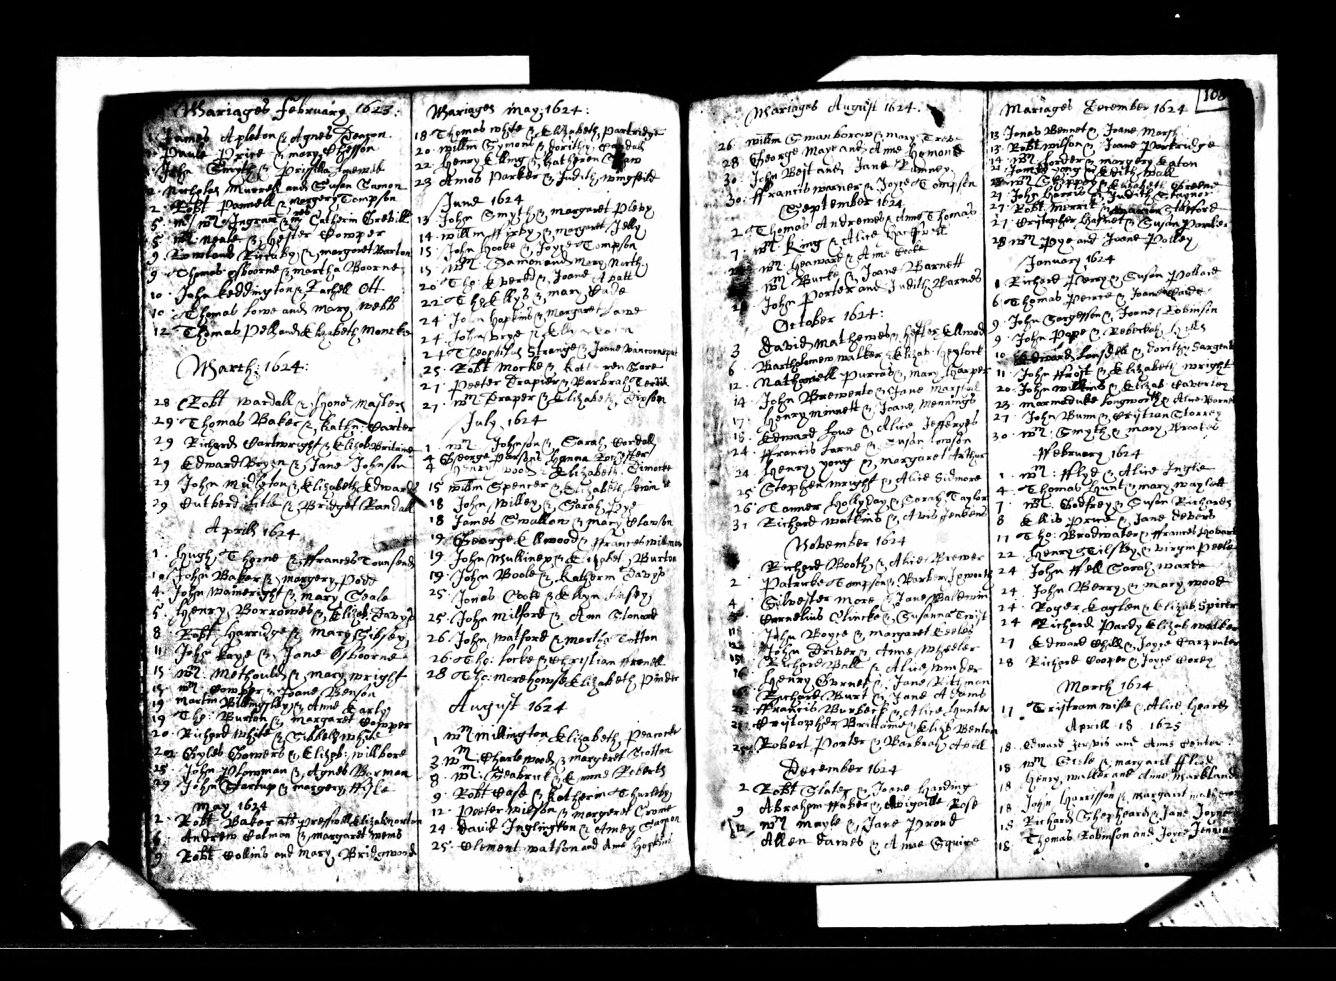 Baptismal Record for Capt. John Locke at Whitechapel, London